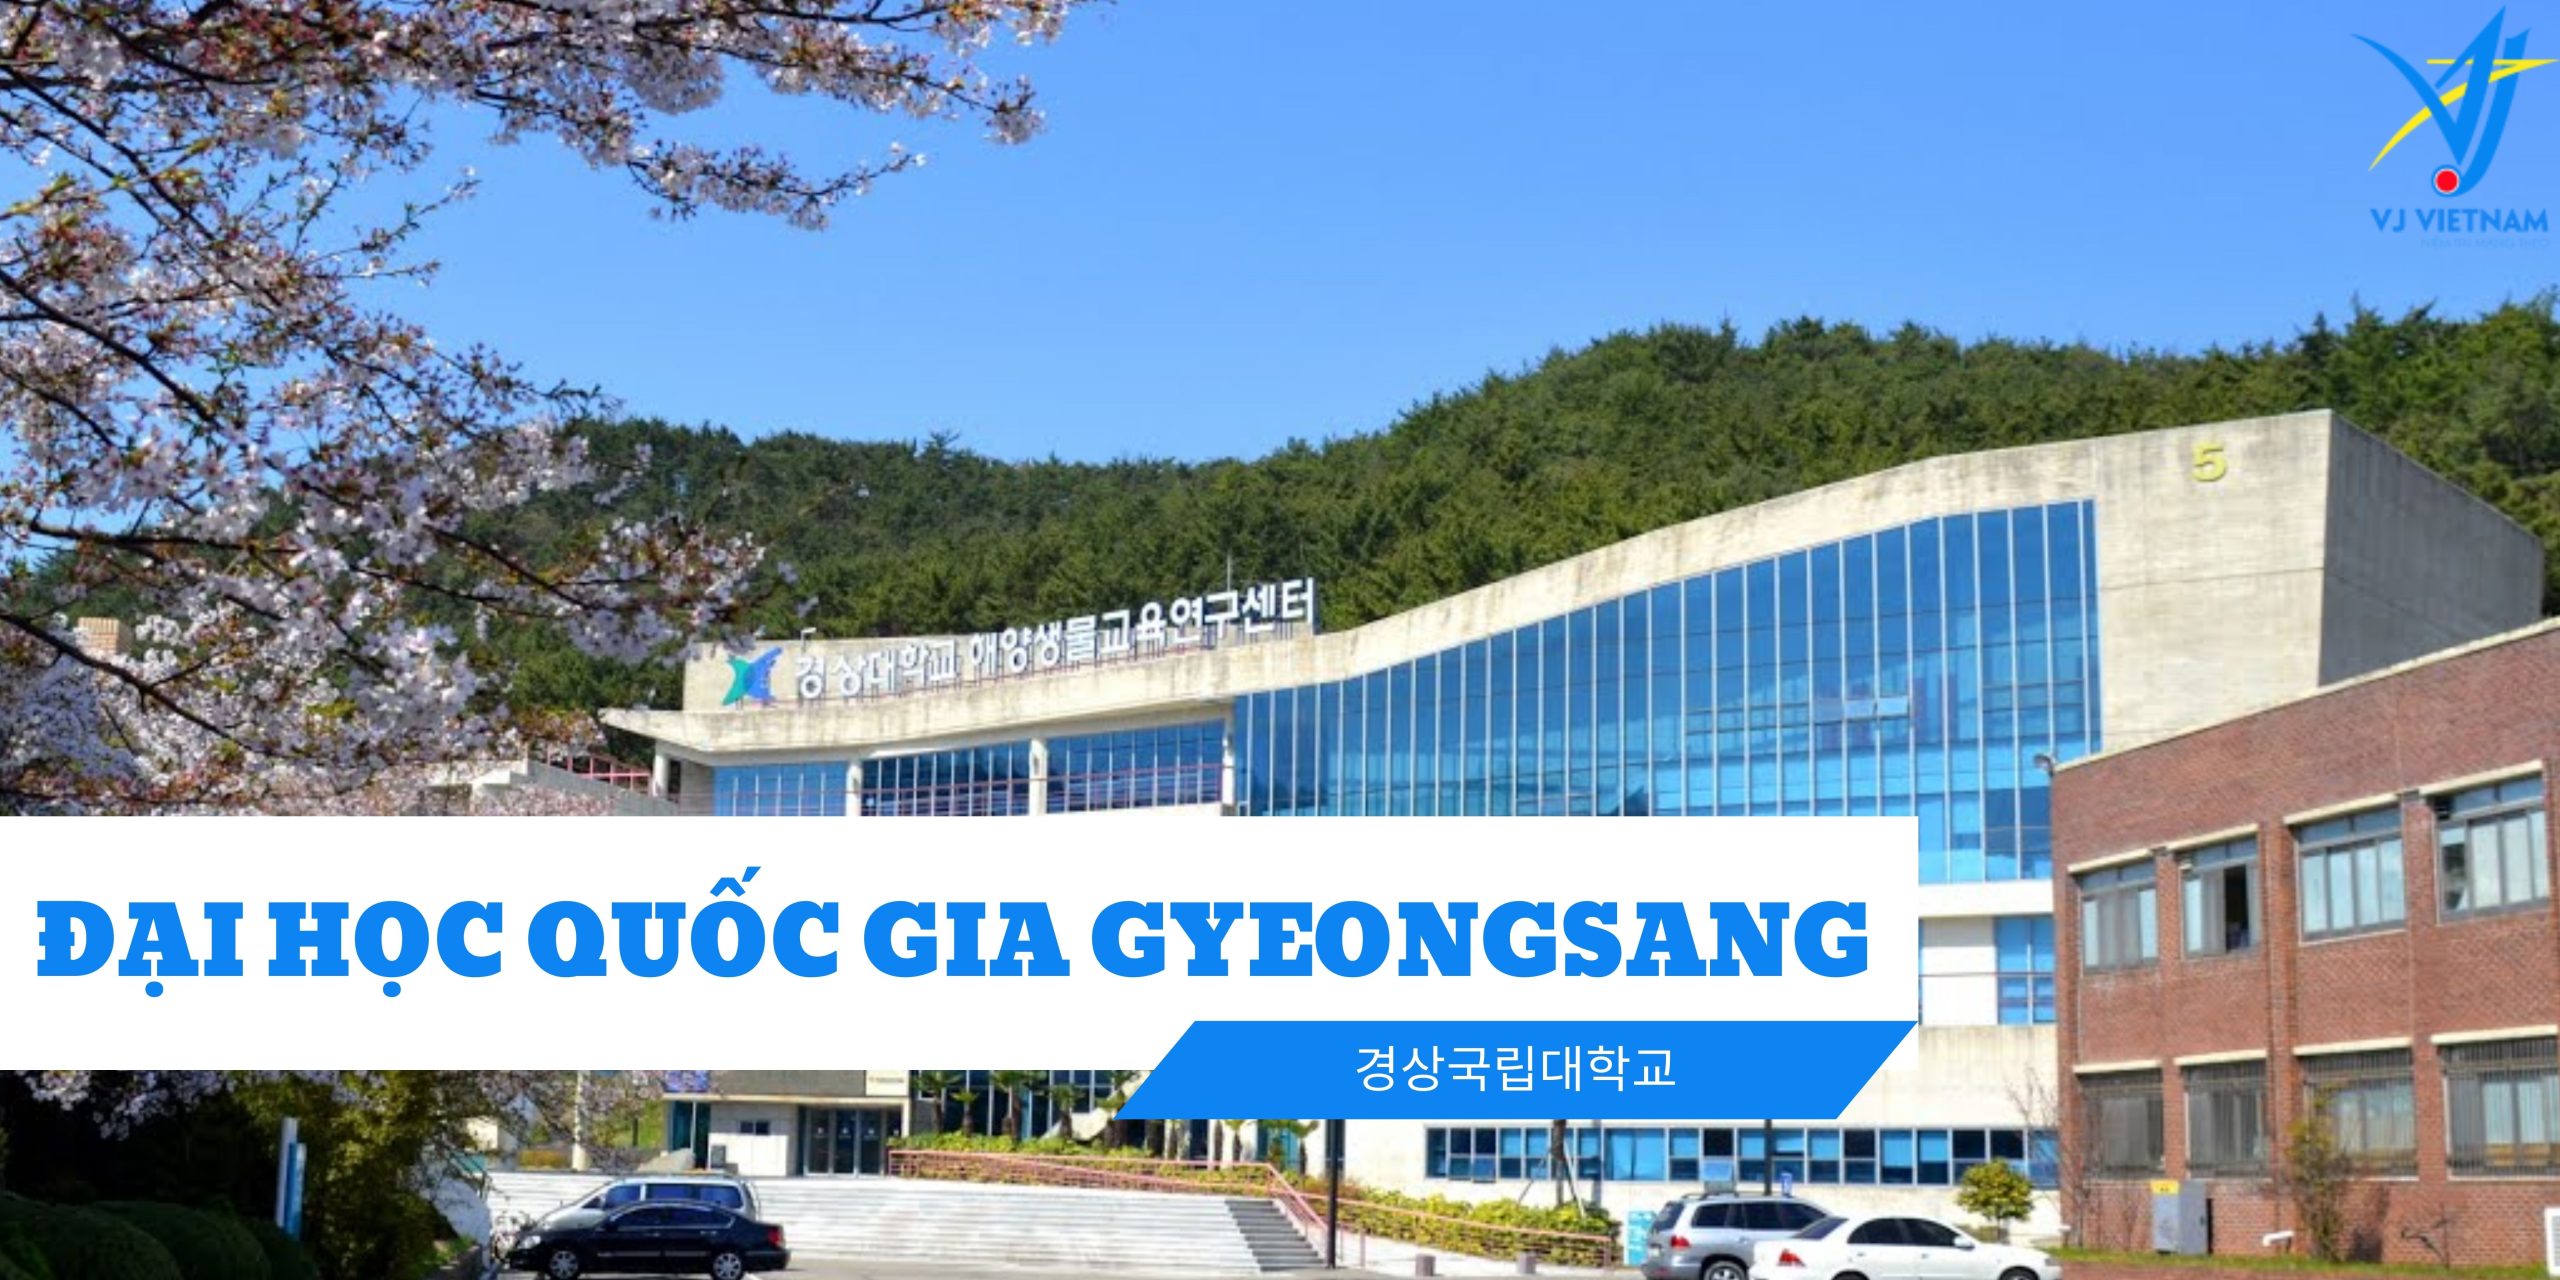 Dai hoc Quoc gia Gyeongsang scaled